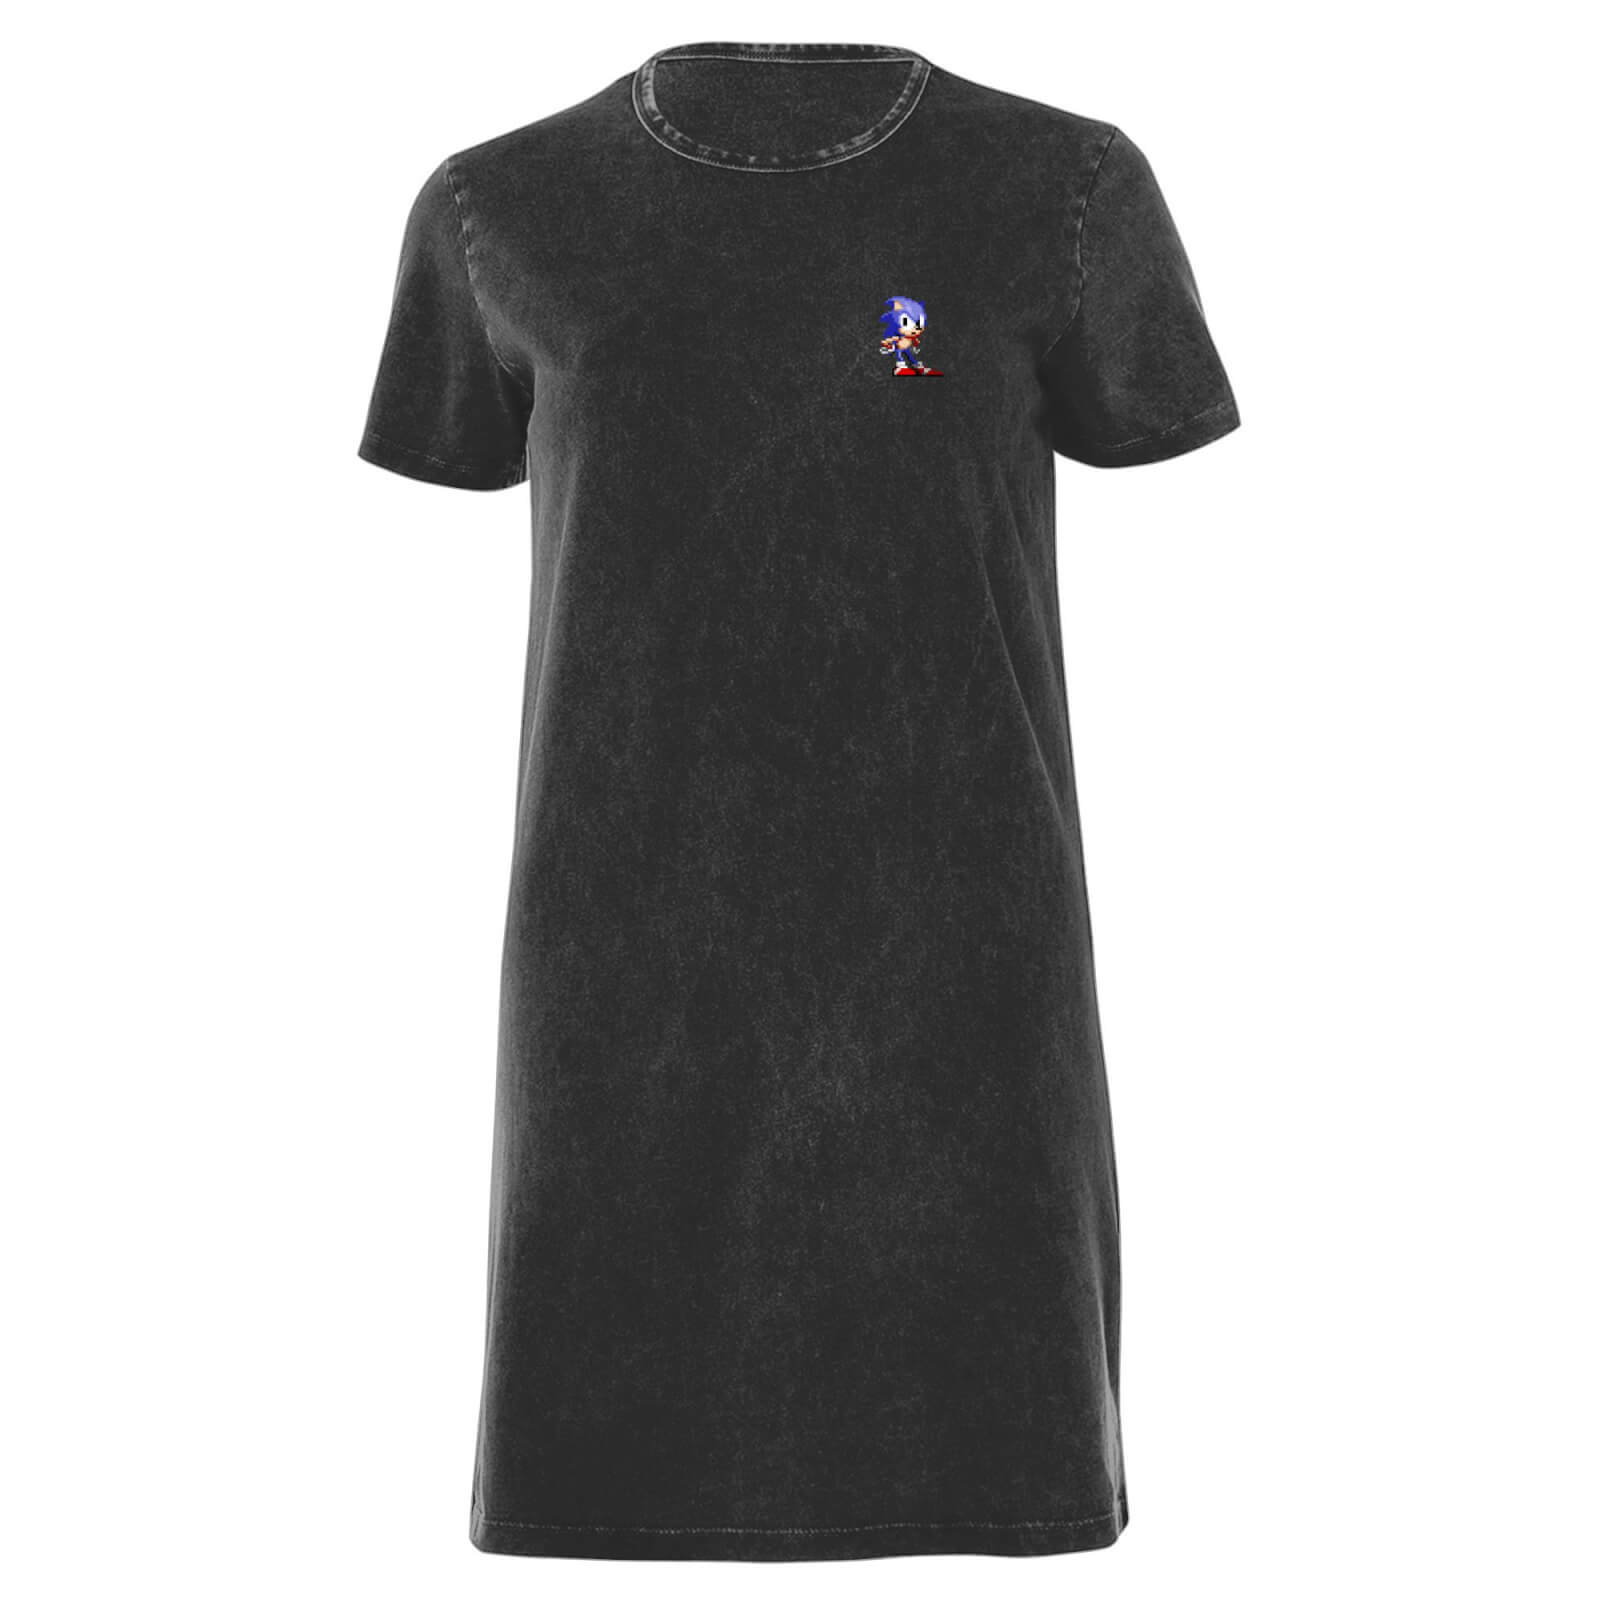 Sega Sonic Pixel Women's T-Shirt Dress - Black Acid Wash - S - Black Acid Wash